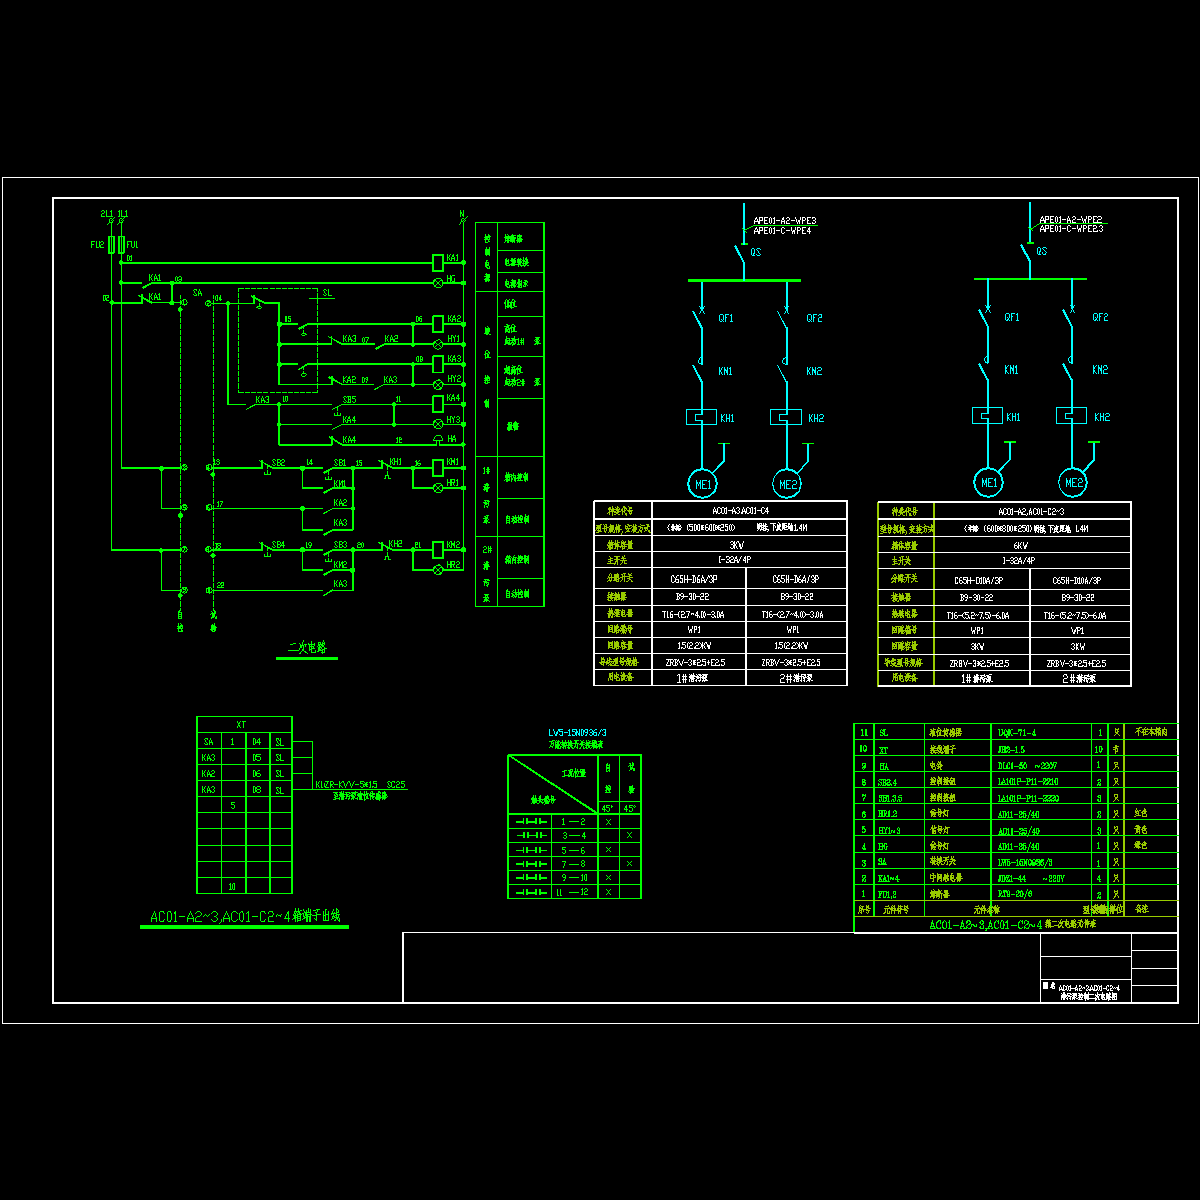 ac01-a2~3,ac01-c2~4潜污泵控制二次电路图.dwg